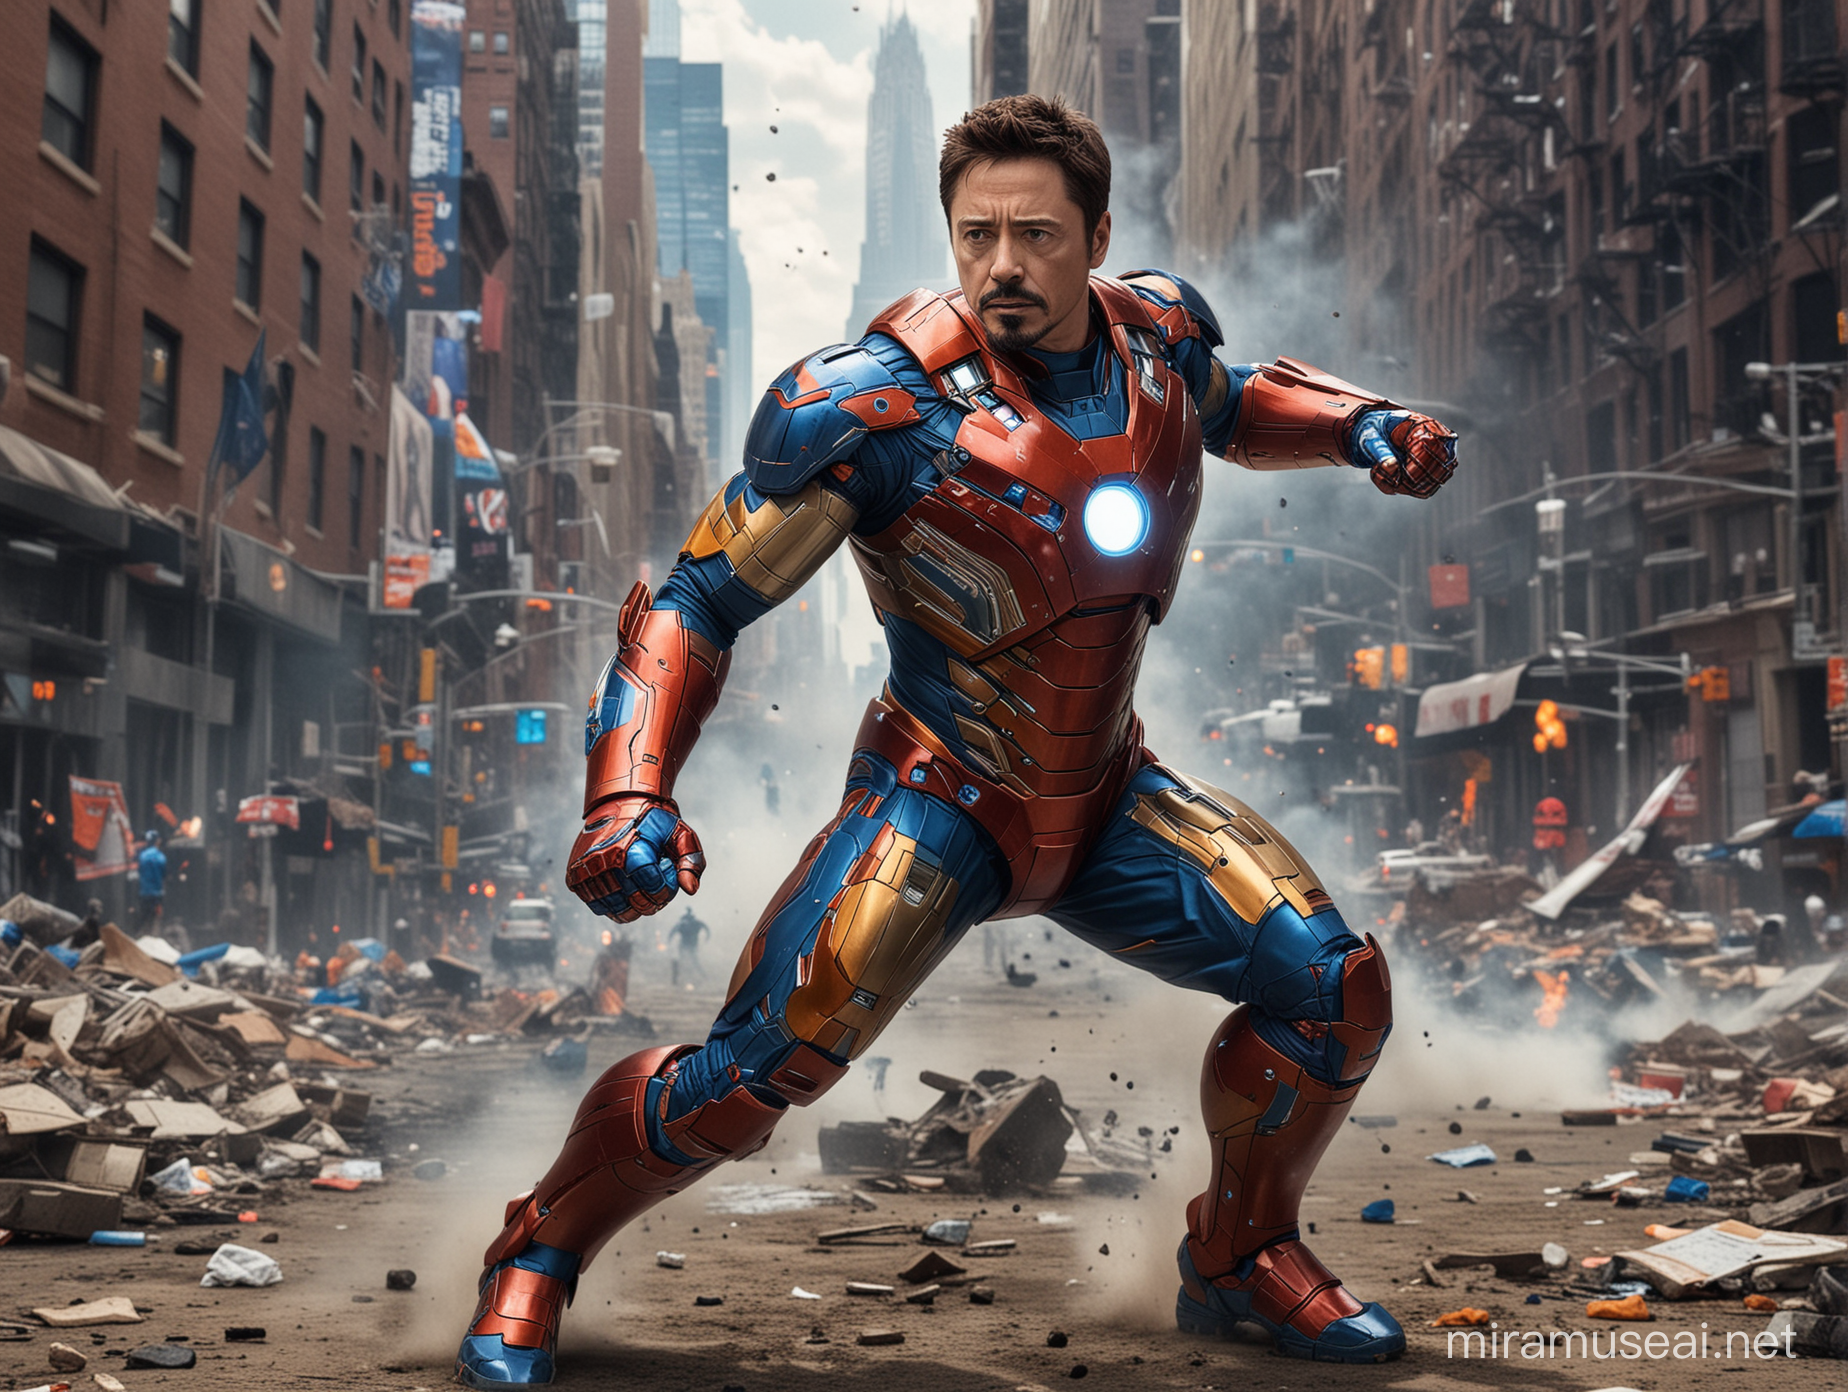 Tony Stark as Ironman Saves New York Mets Stadium